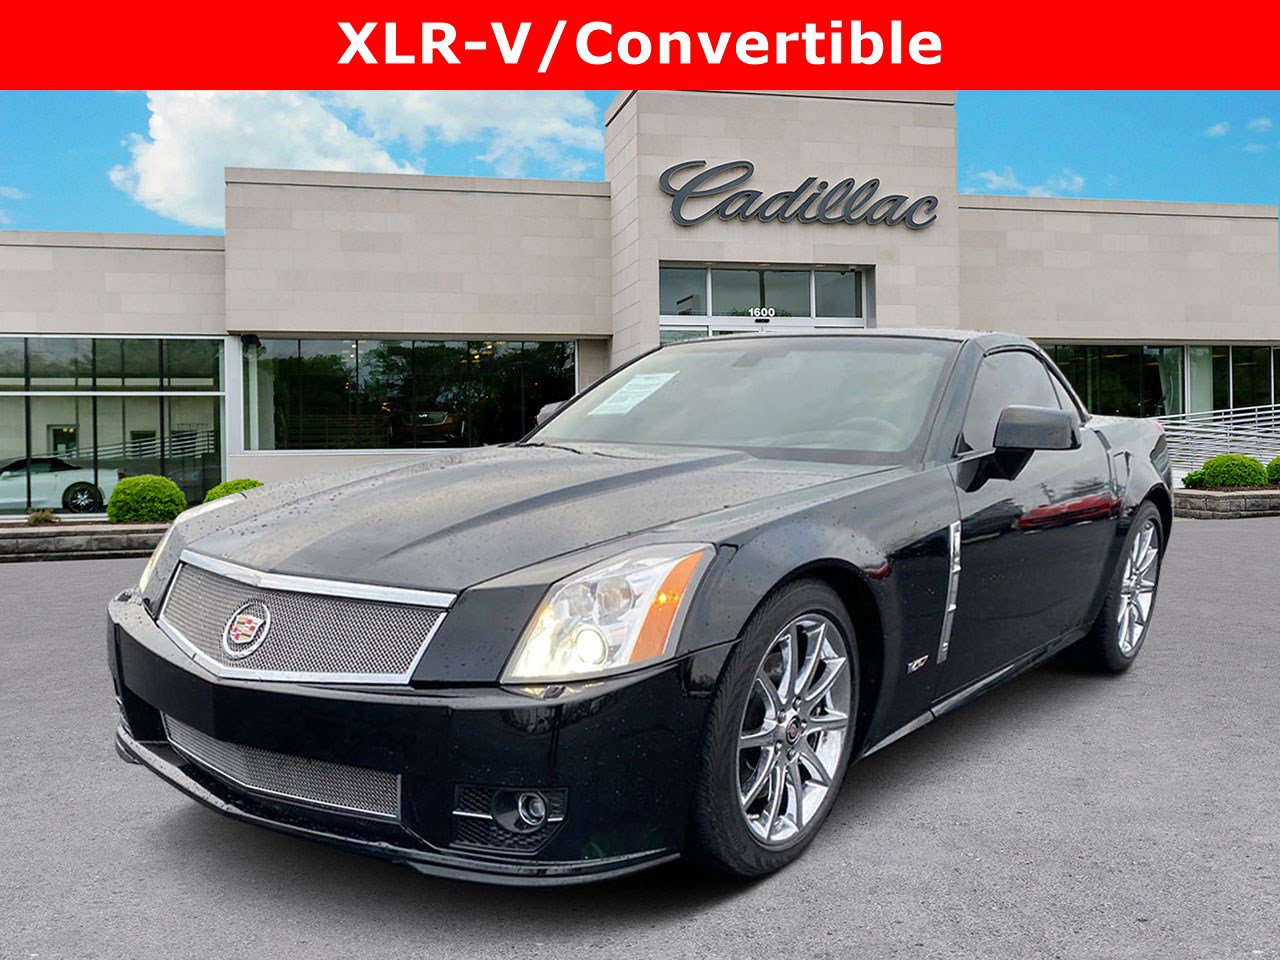 Pre-Owned 2009 Cadillac XLR 2DR CONV Convertible in Peoria #0900329 |  Uftring Weston Cadillac